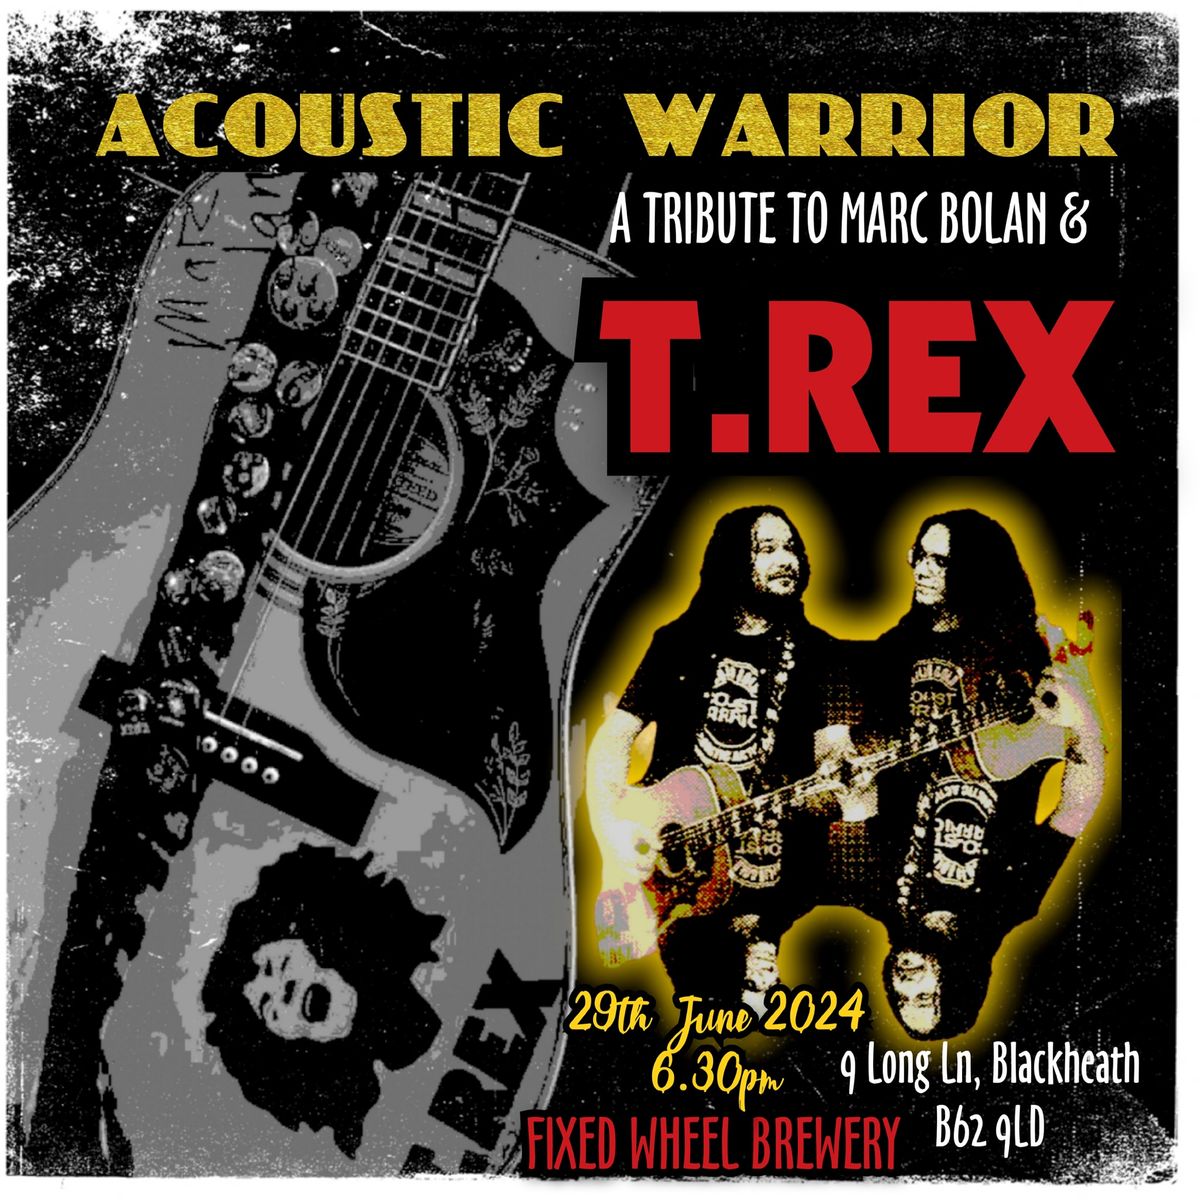 Blackheath Birmingham T.rex Tribute Acoustic Warrior 